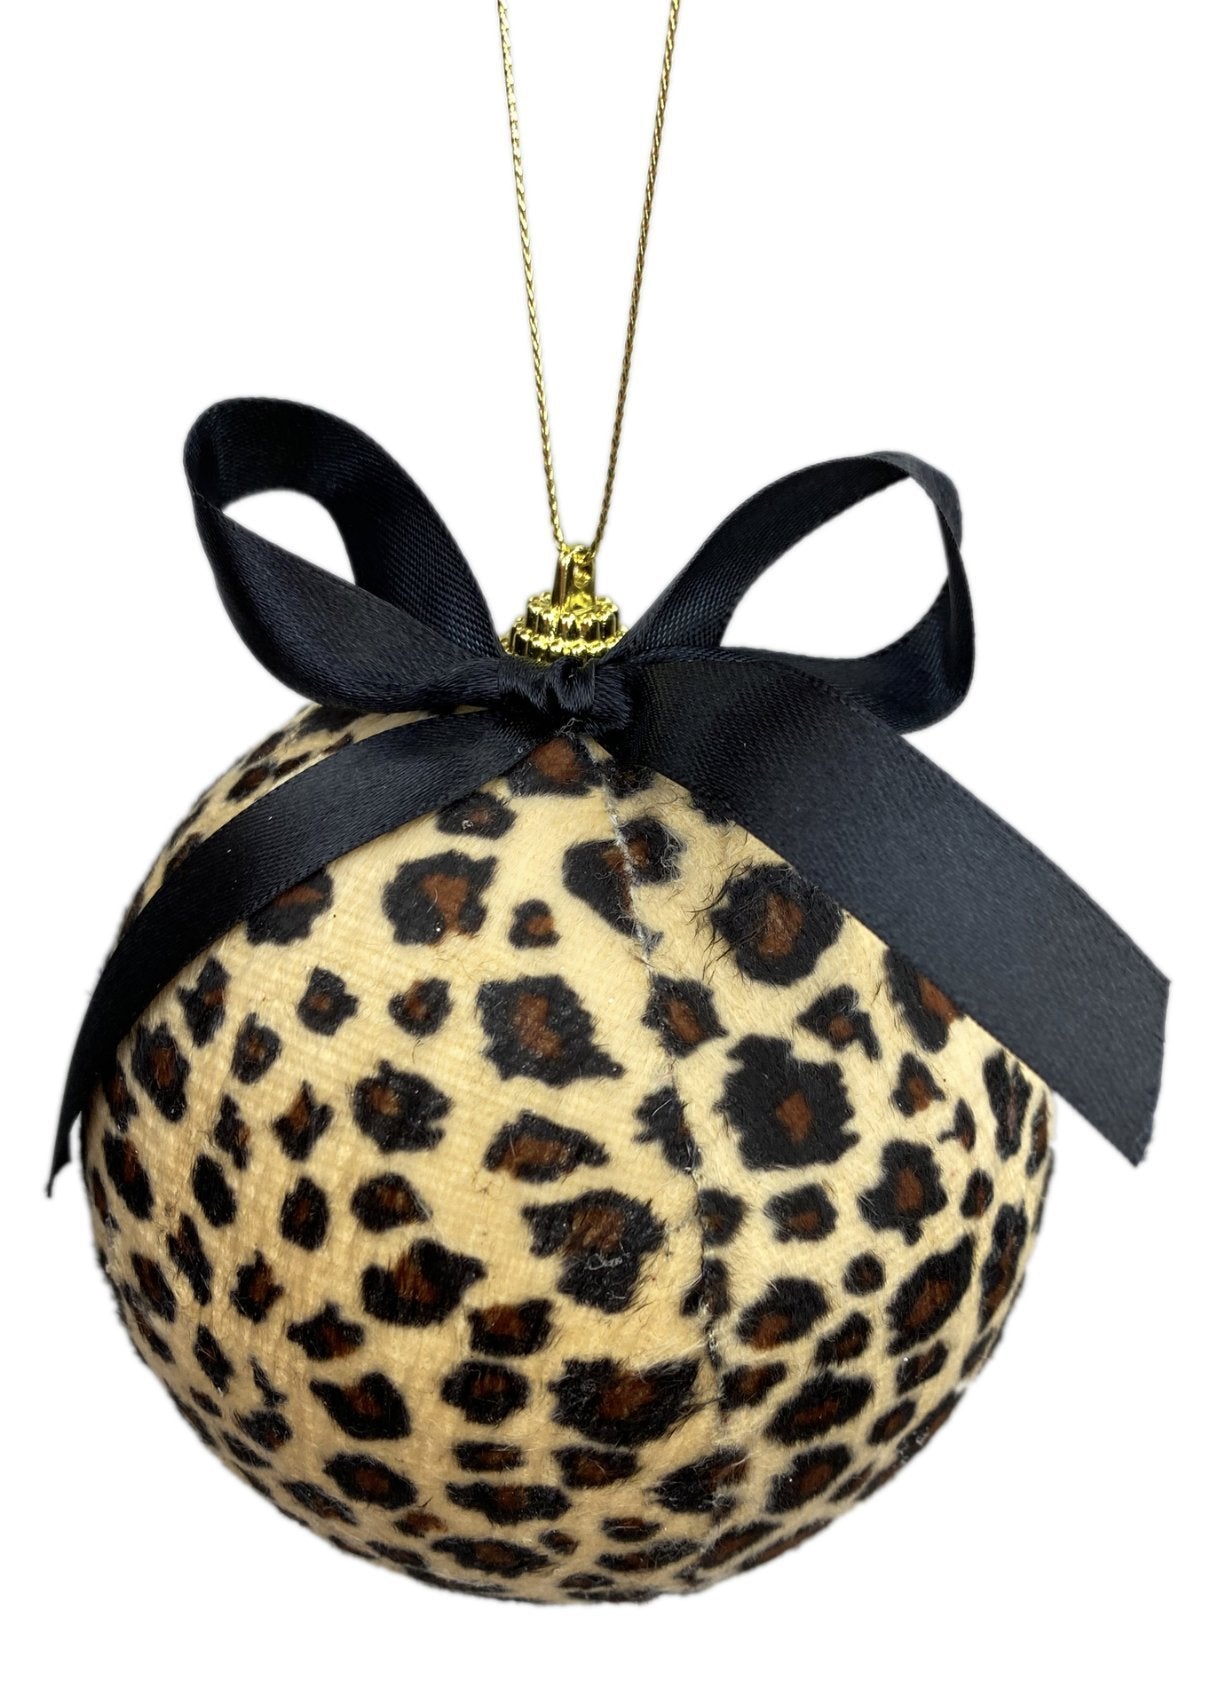 Cheetah ball ornaments - 4” - Greenery MarketOrnaments85248CHEETA